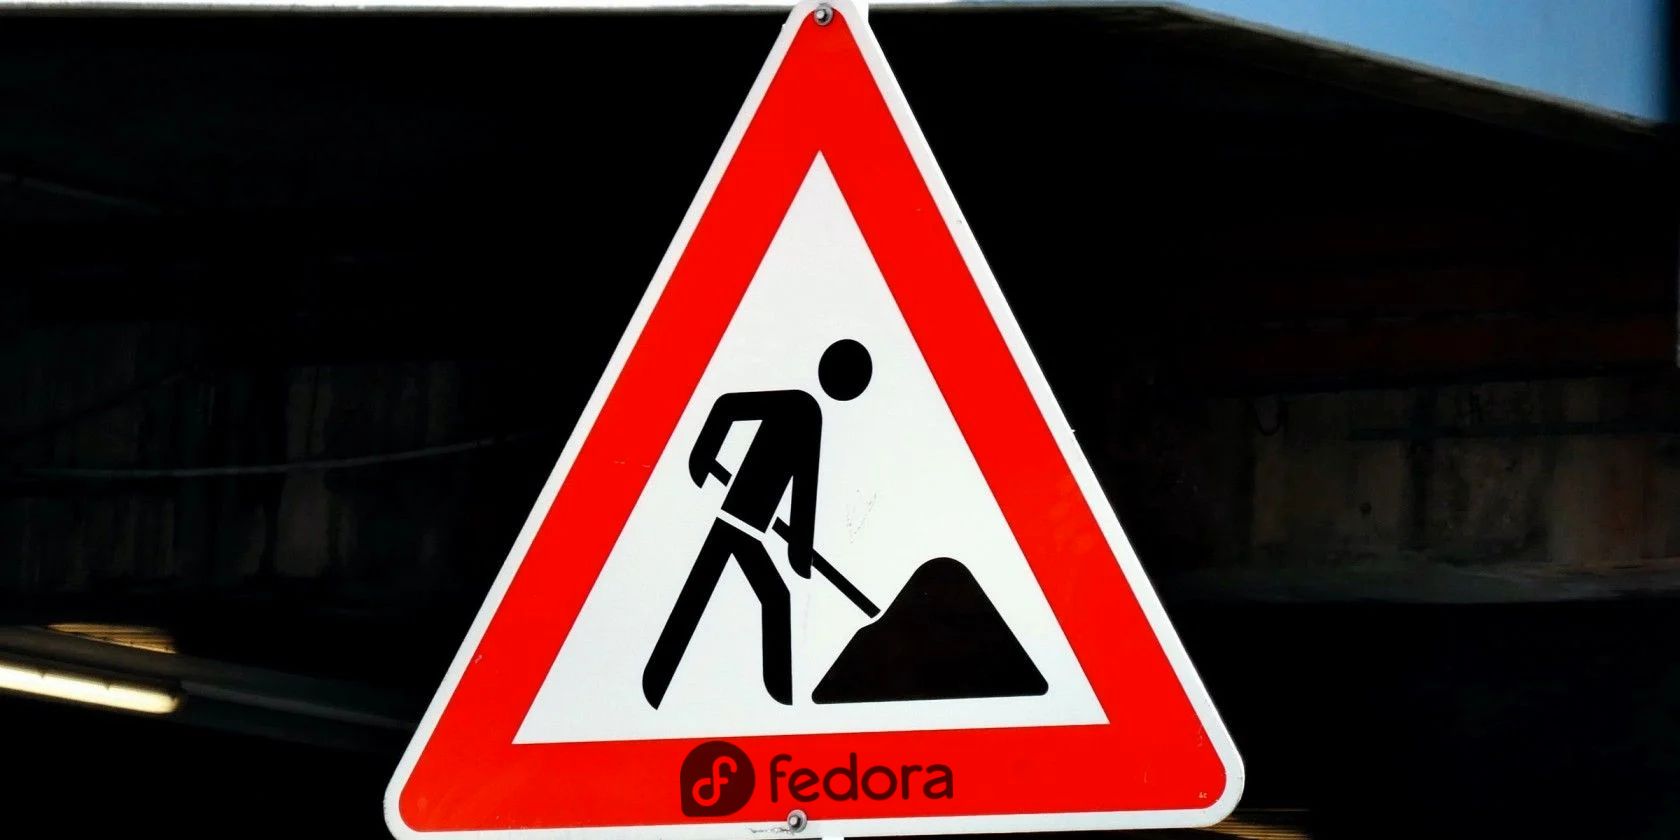 fedora beta sign